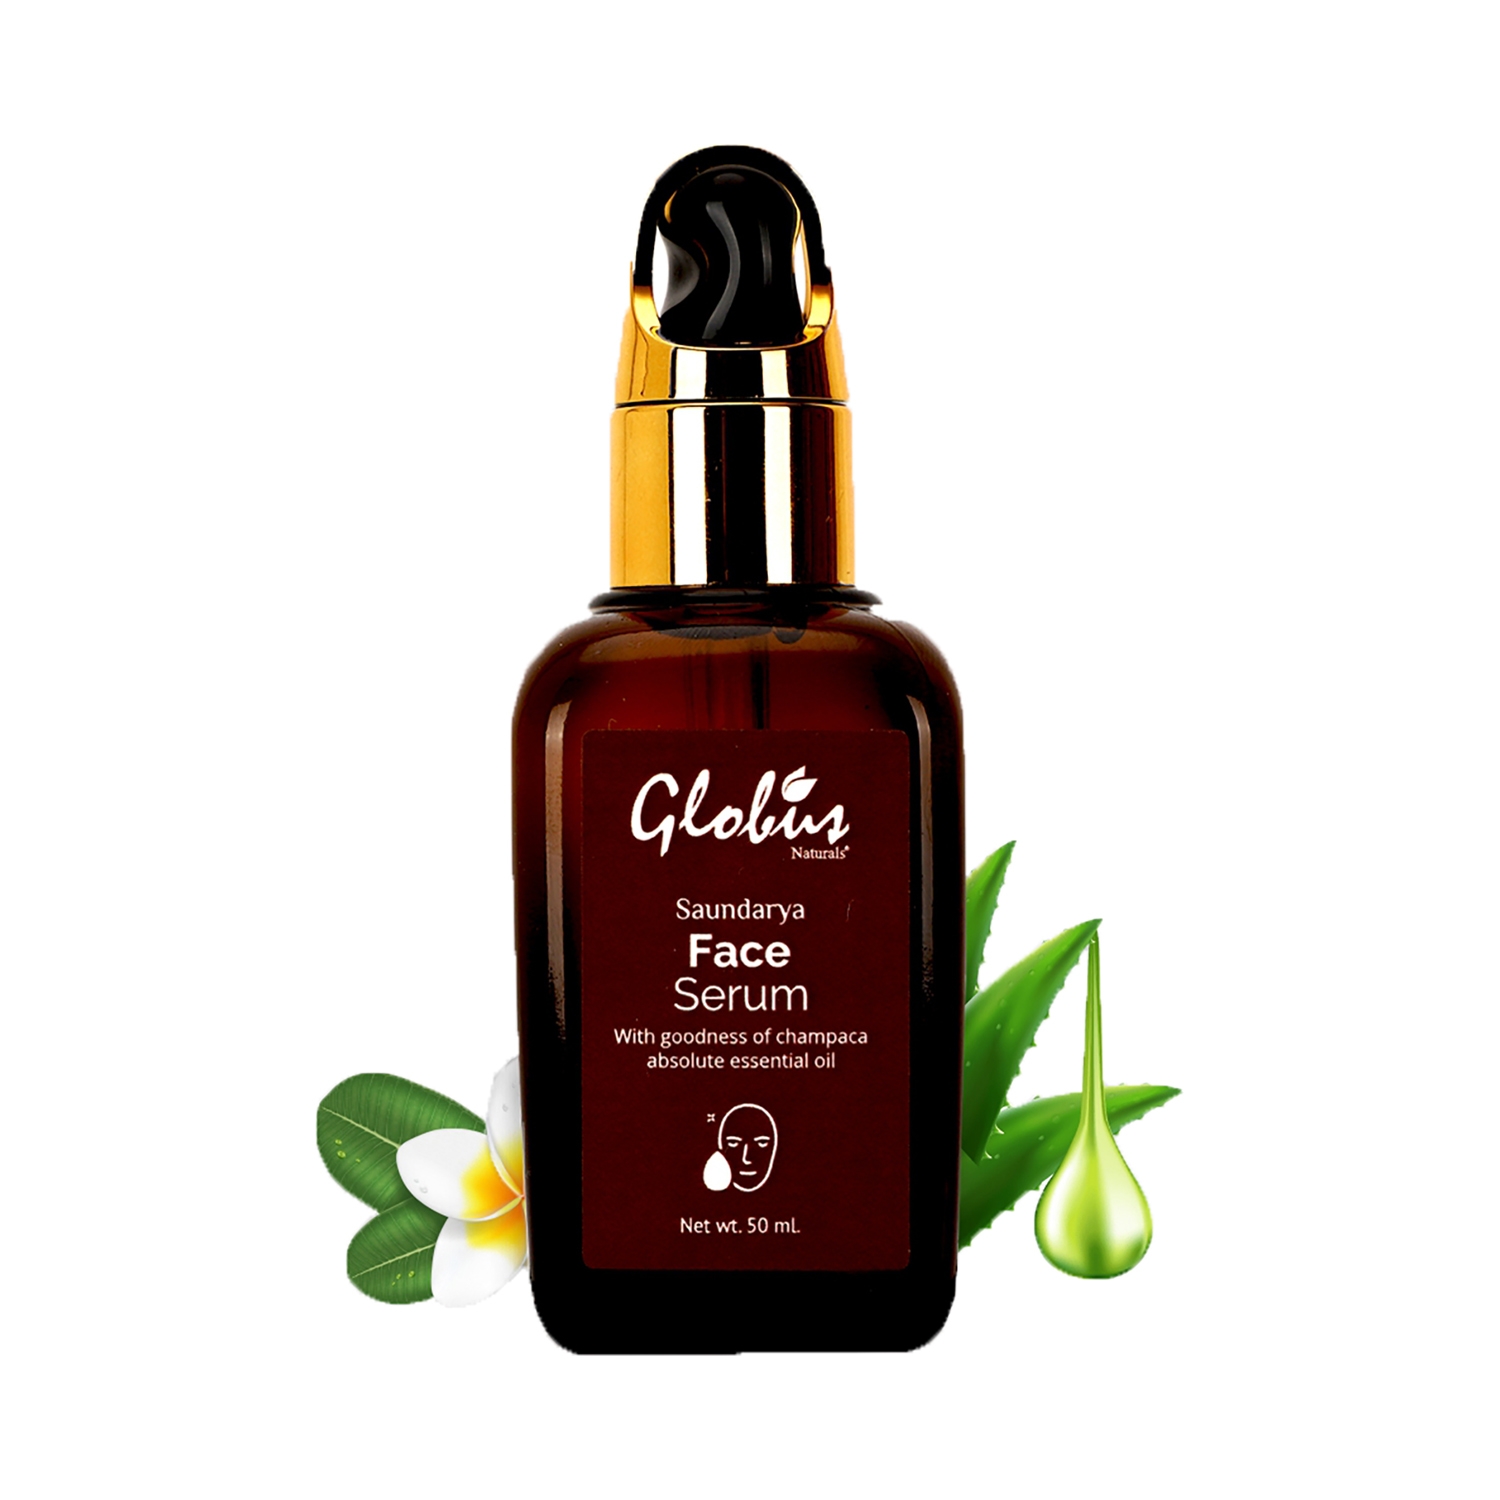 Globus Naturals | Globus Naturals Saundarya Face Serum With Goodness Of Champaca Absolute Essential Oil (30ml)